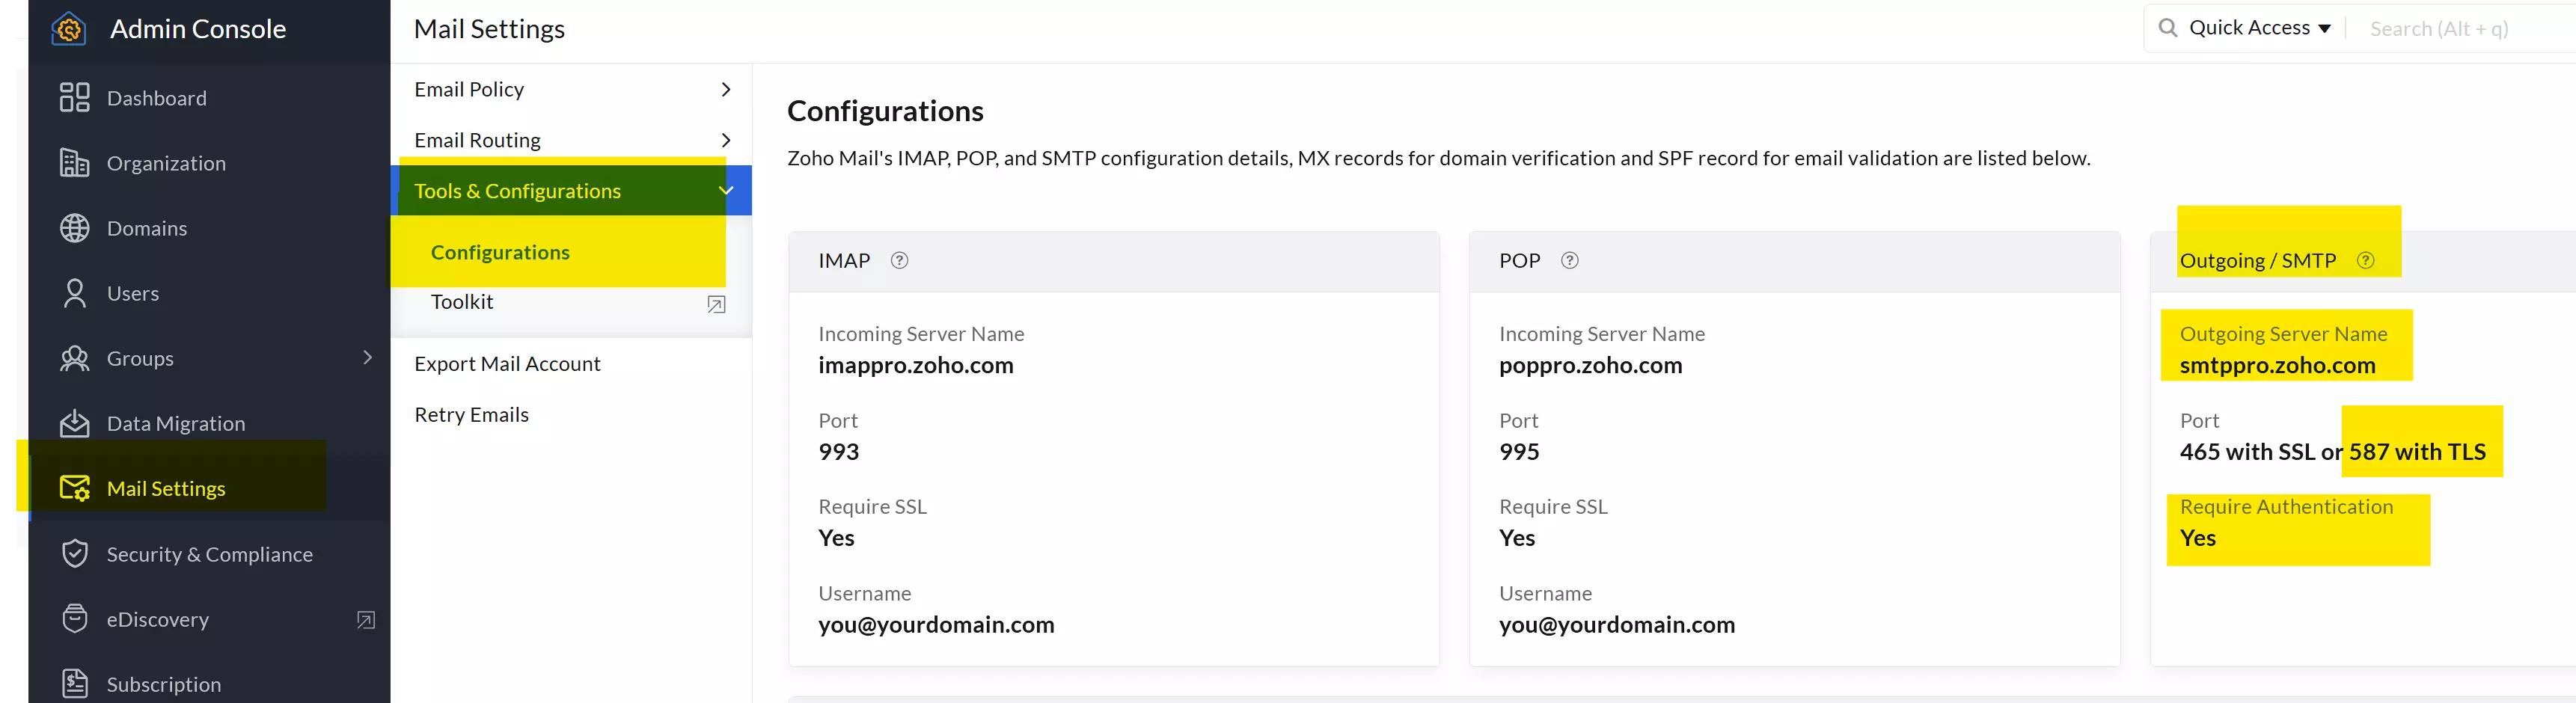 Retrieve SMTP information via the Mail Settings tab in Zoho Mail.